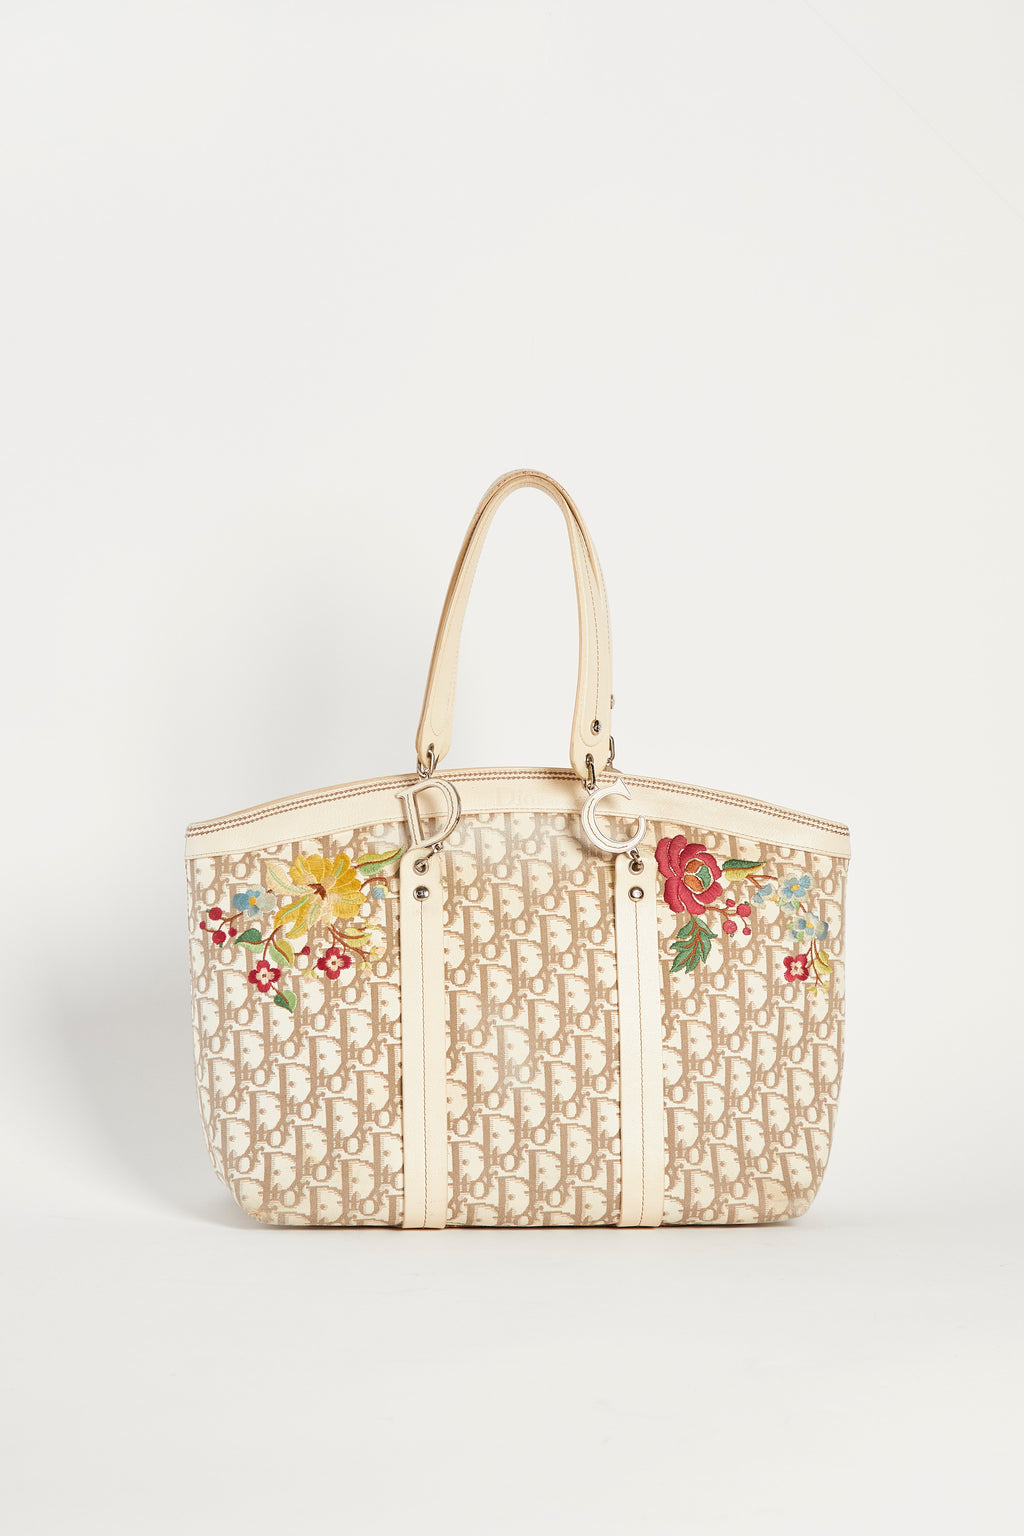 Vintage Christian Dior Floral Diorissimo Tote Bag